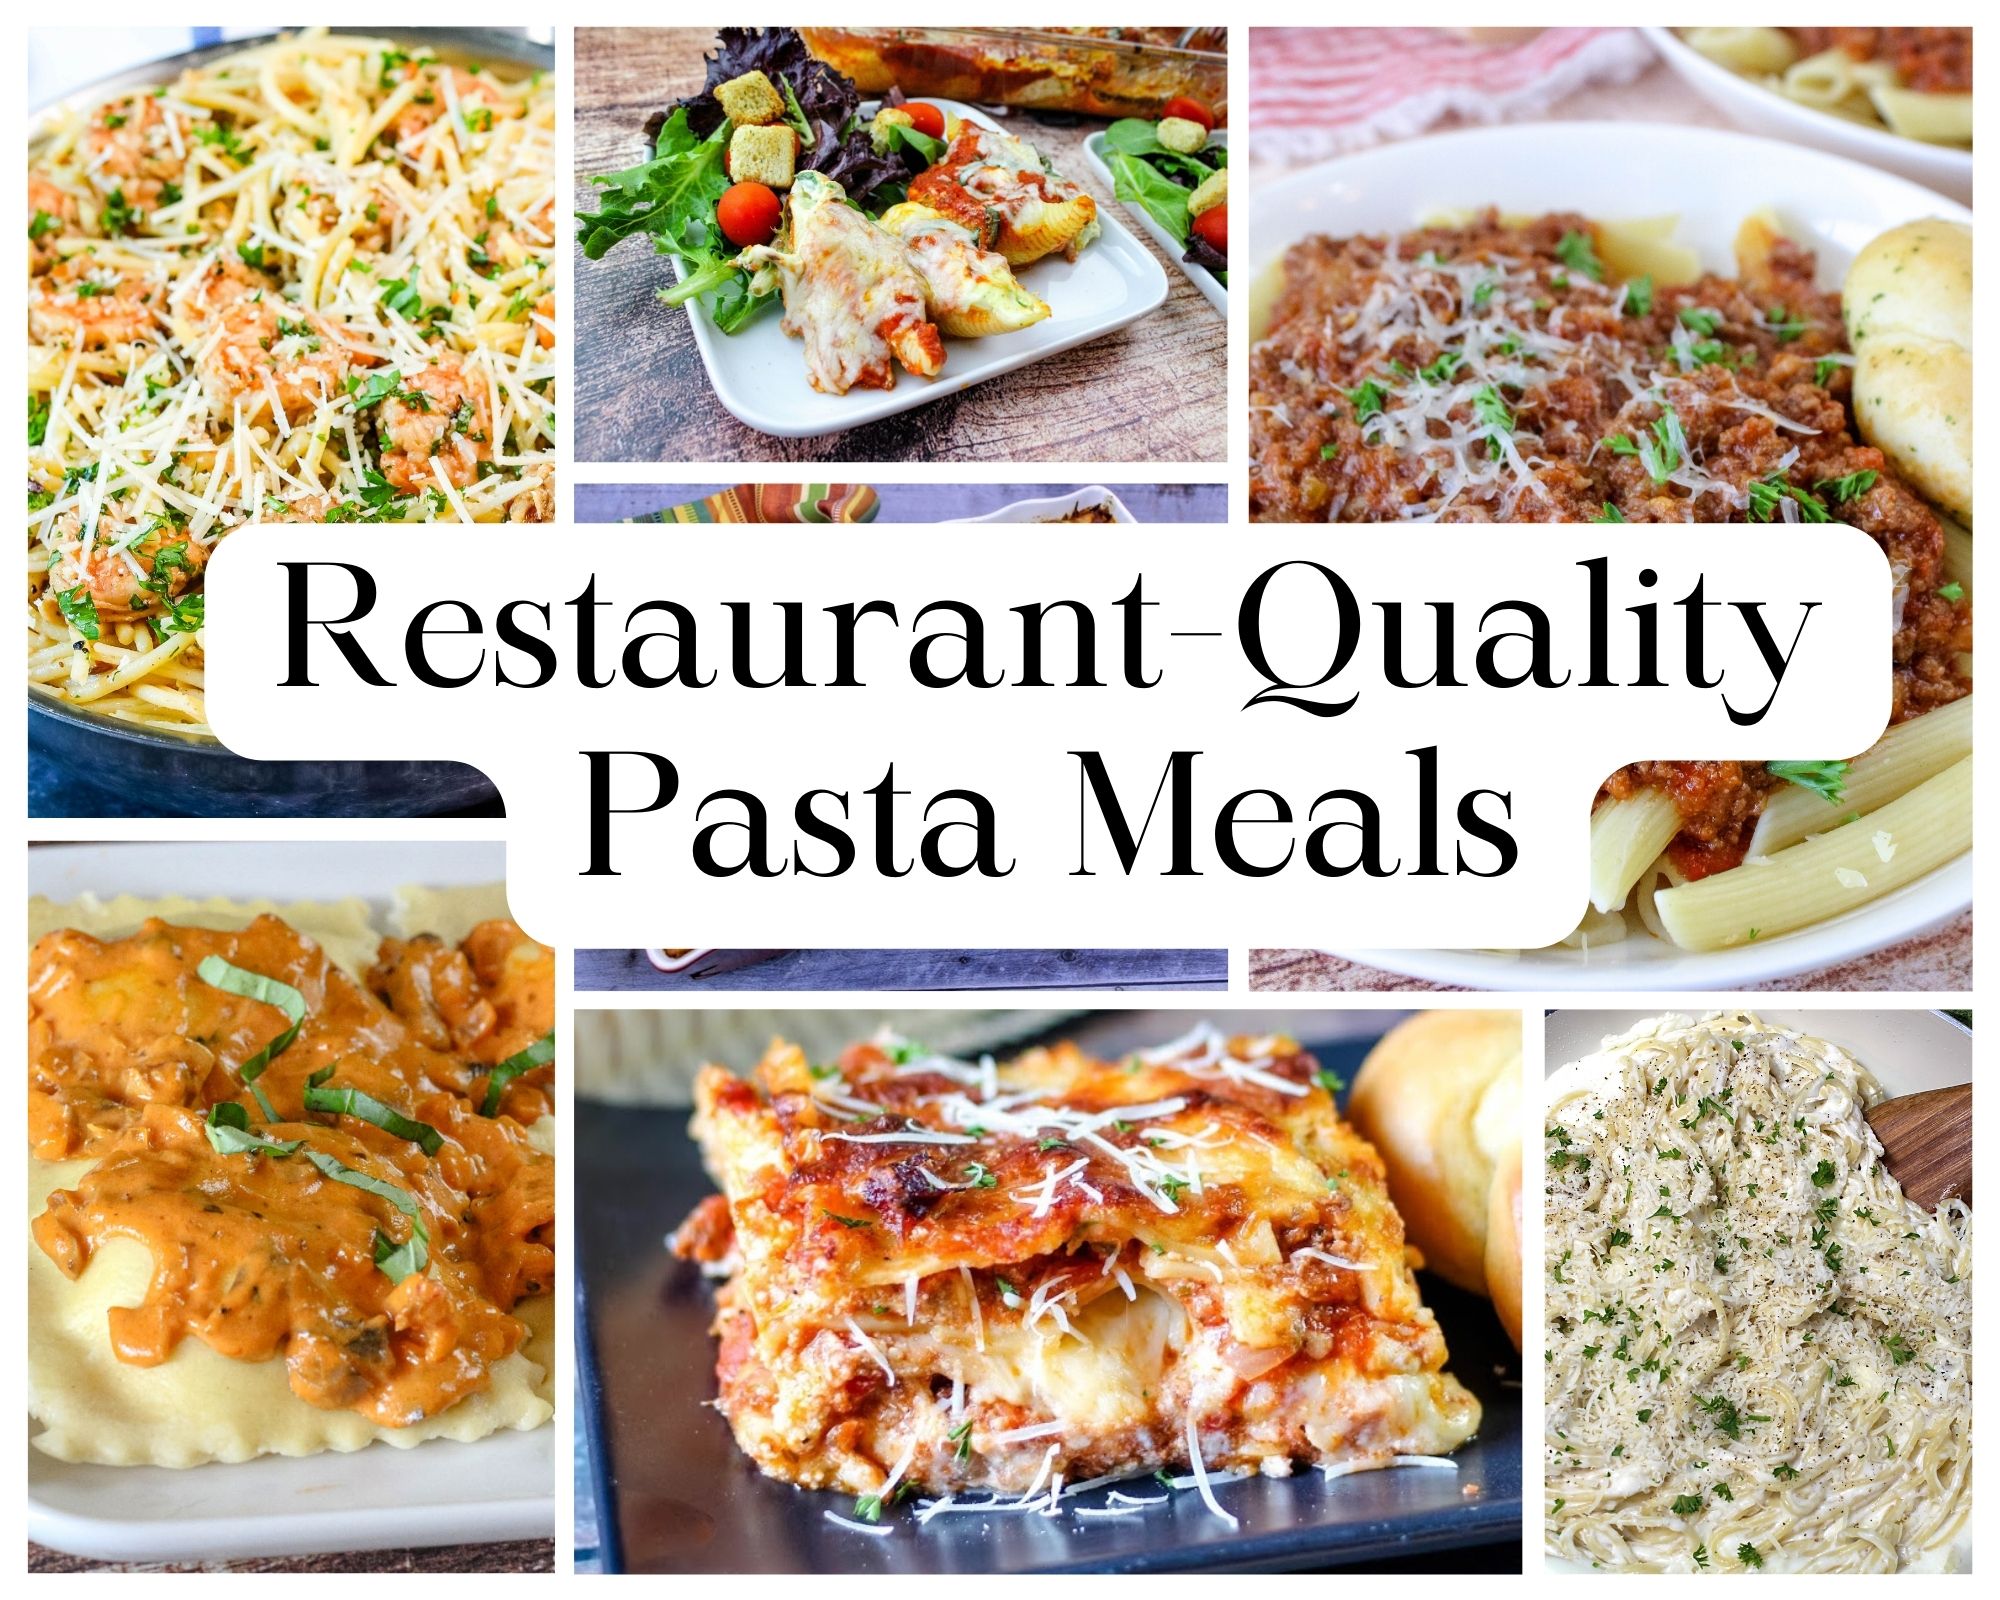 Restaurant-Quality Pasta Meals